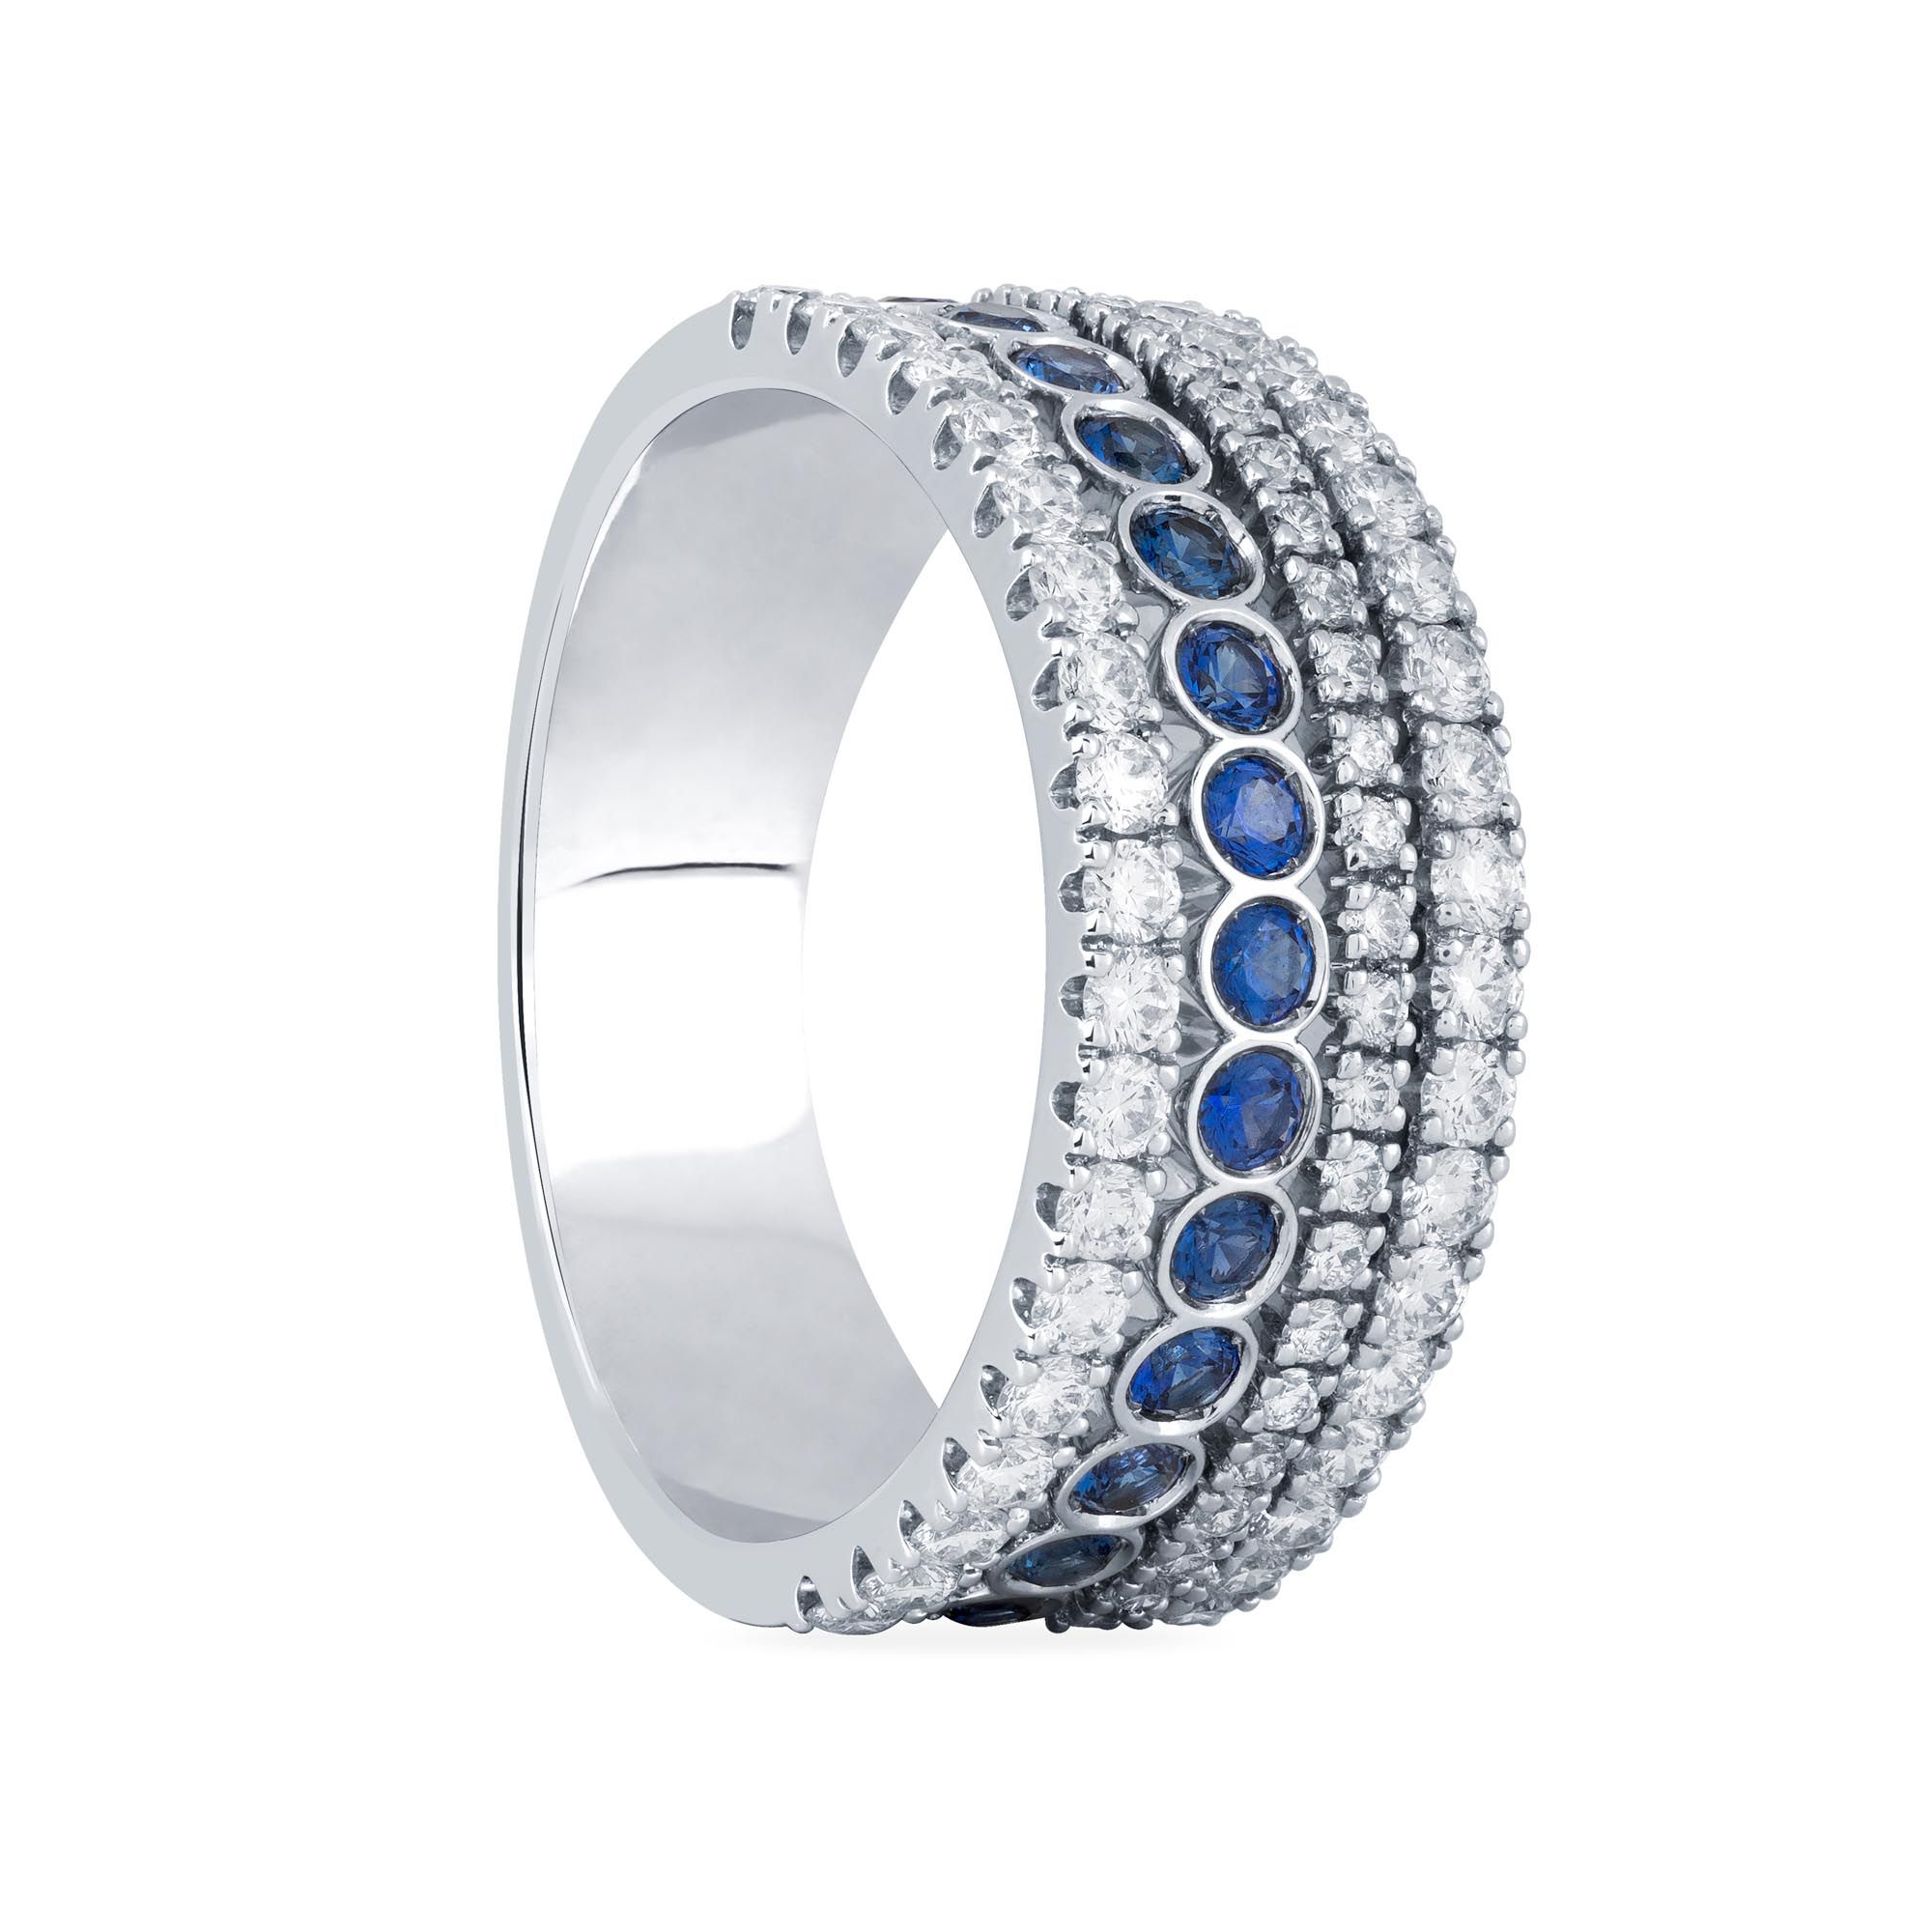 Birks Splash Diamond and Sapphire Ring